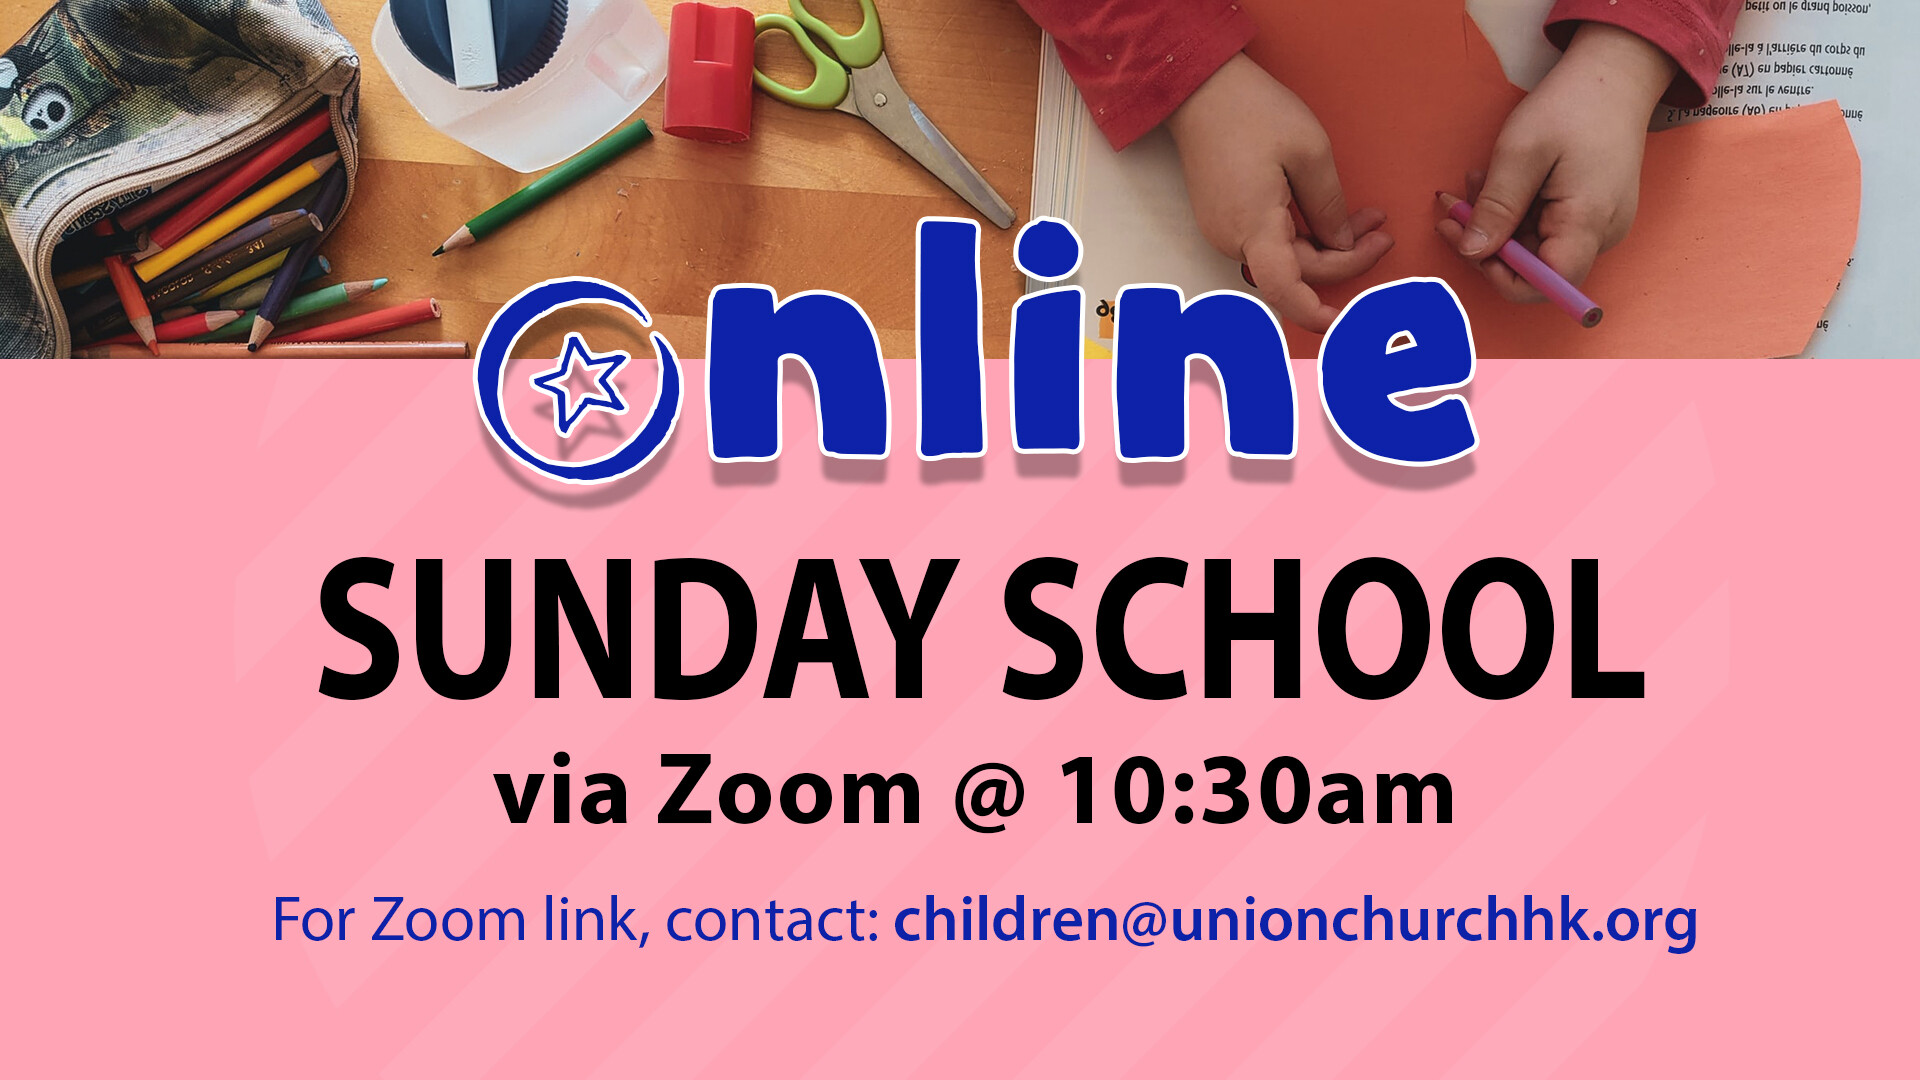 Sunday School online at Union Church